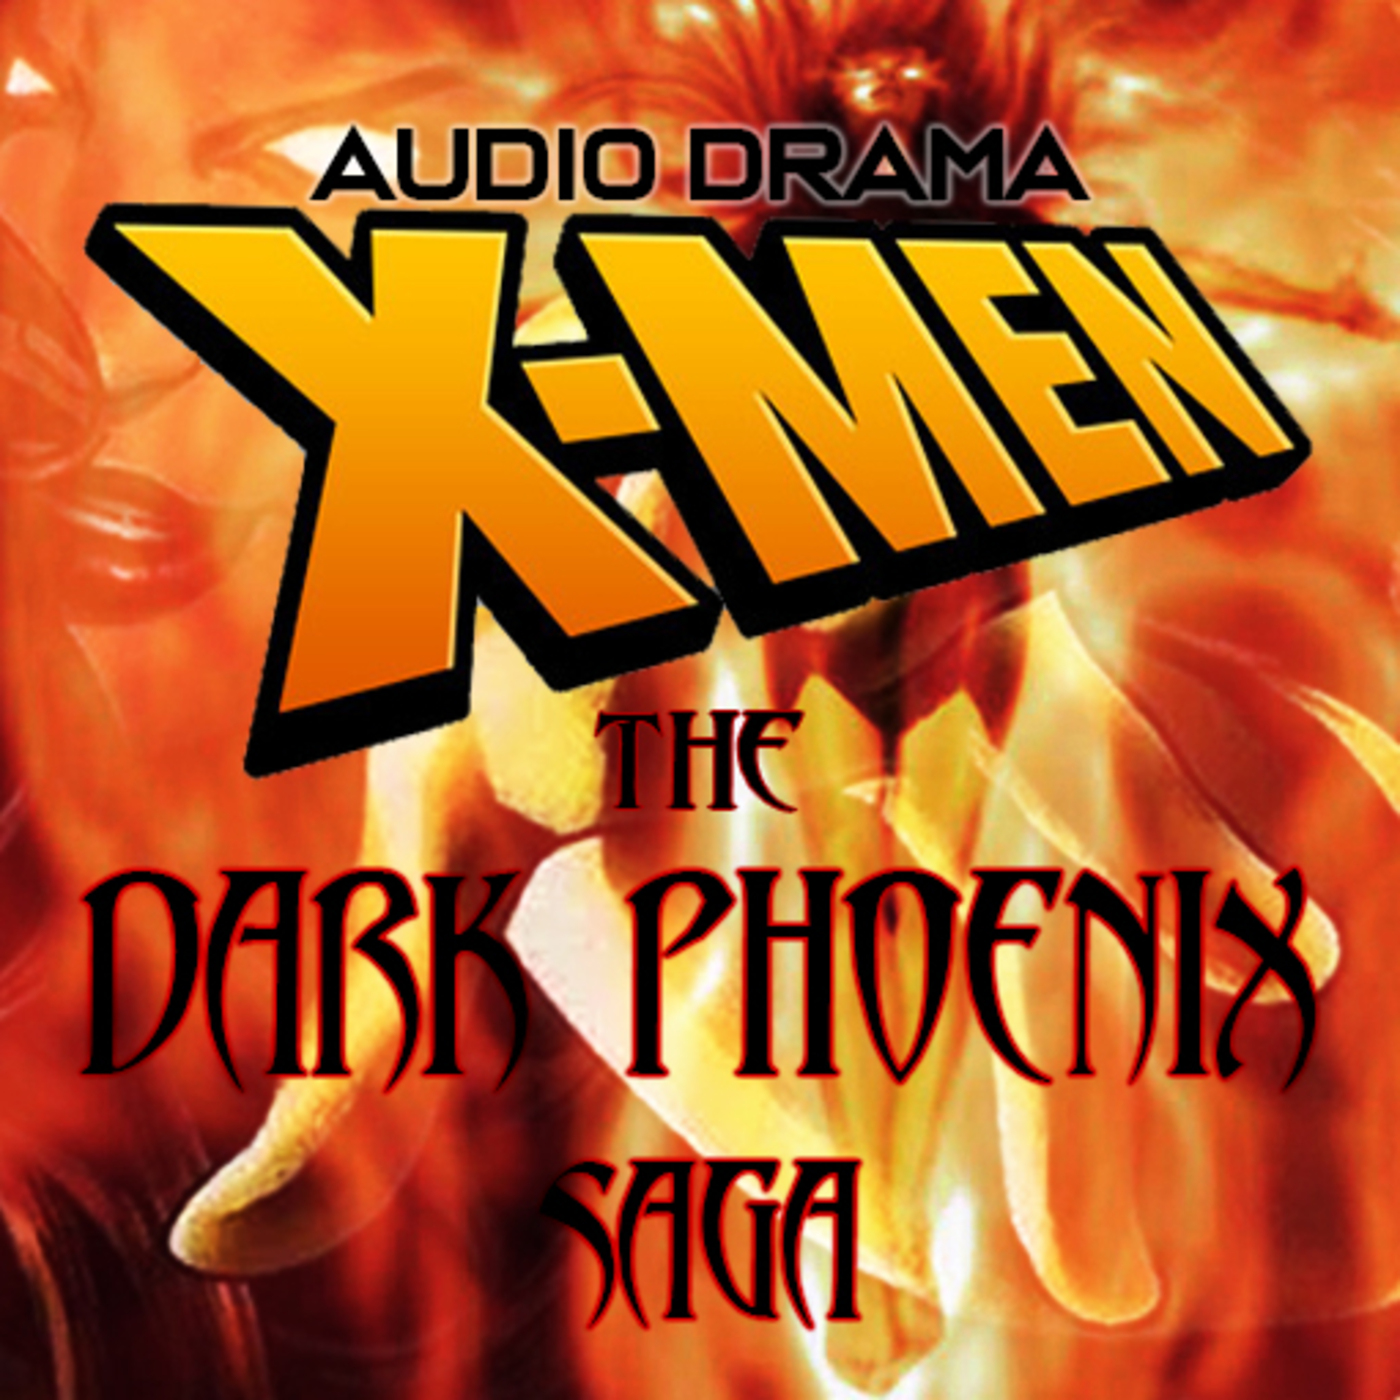 What happened to X-Men the Audio Drama? Series Update 6.6.19